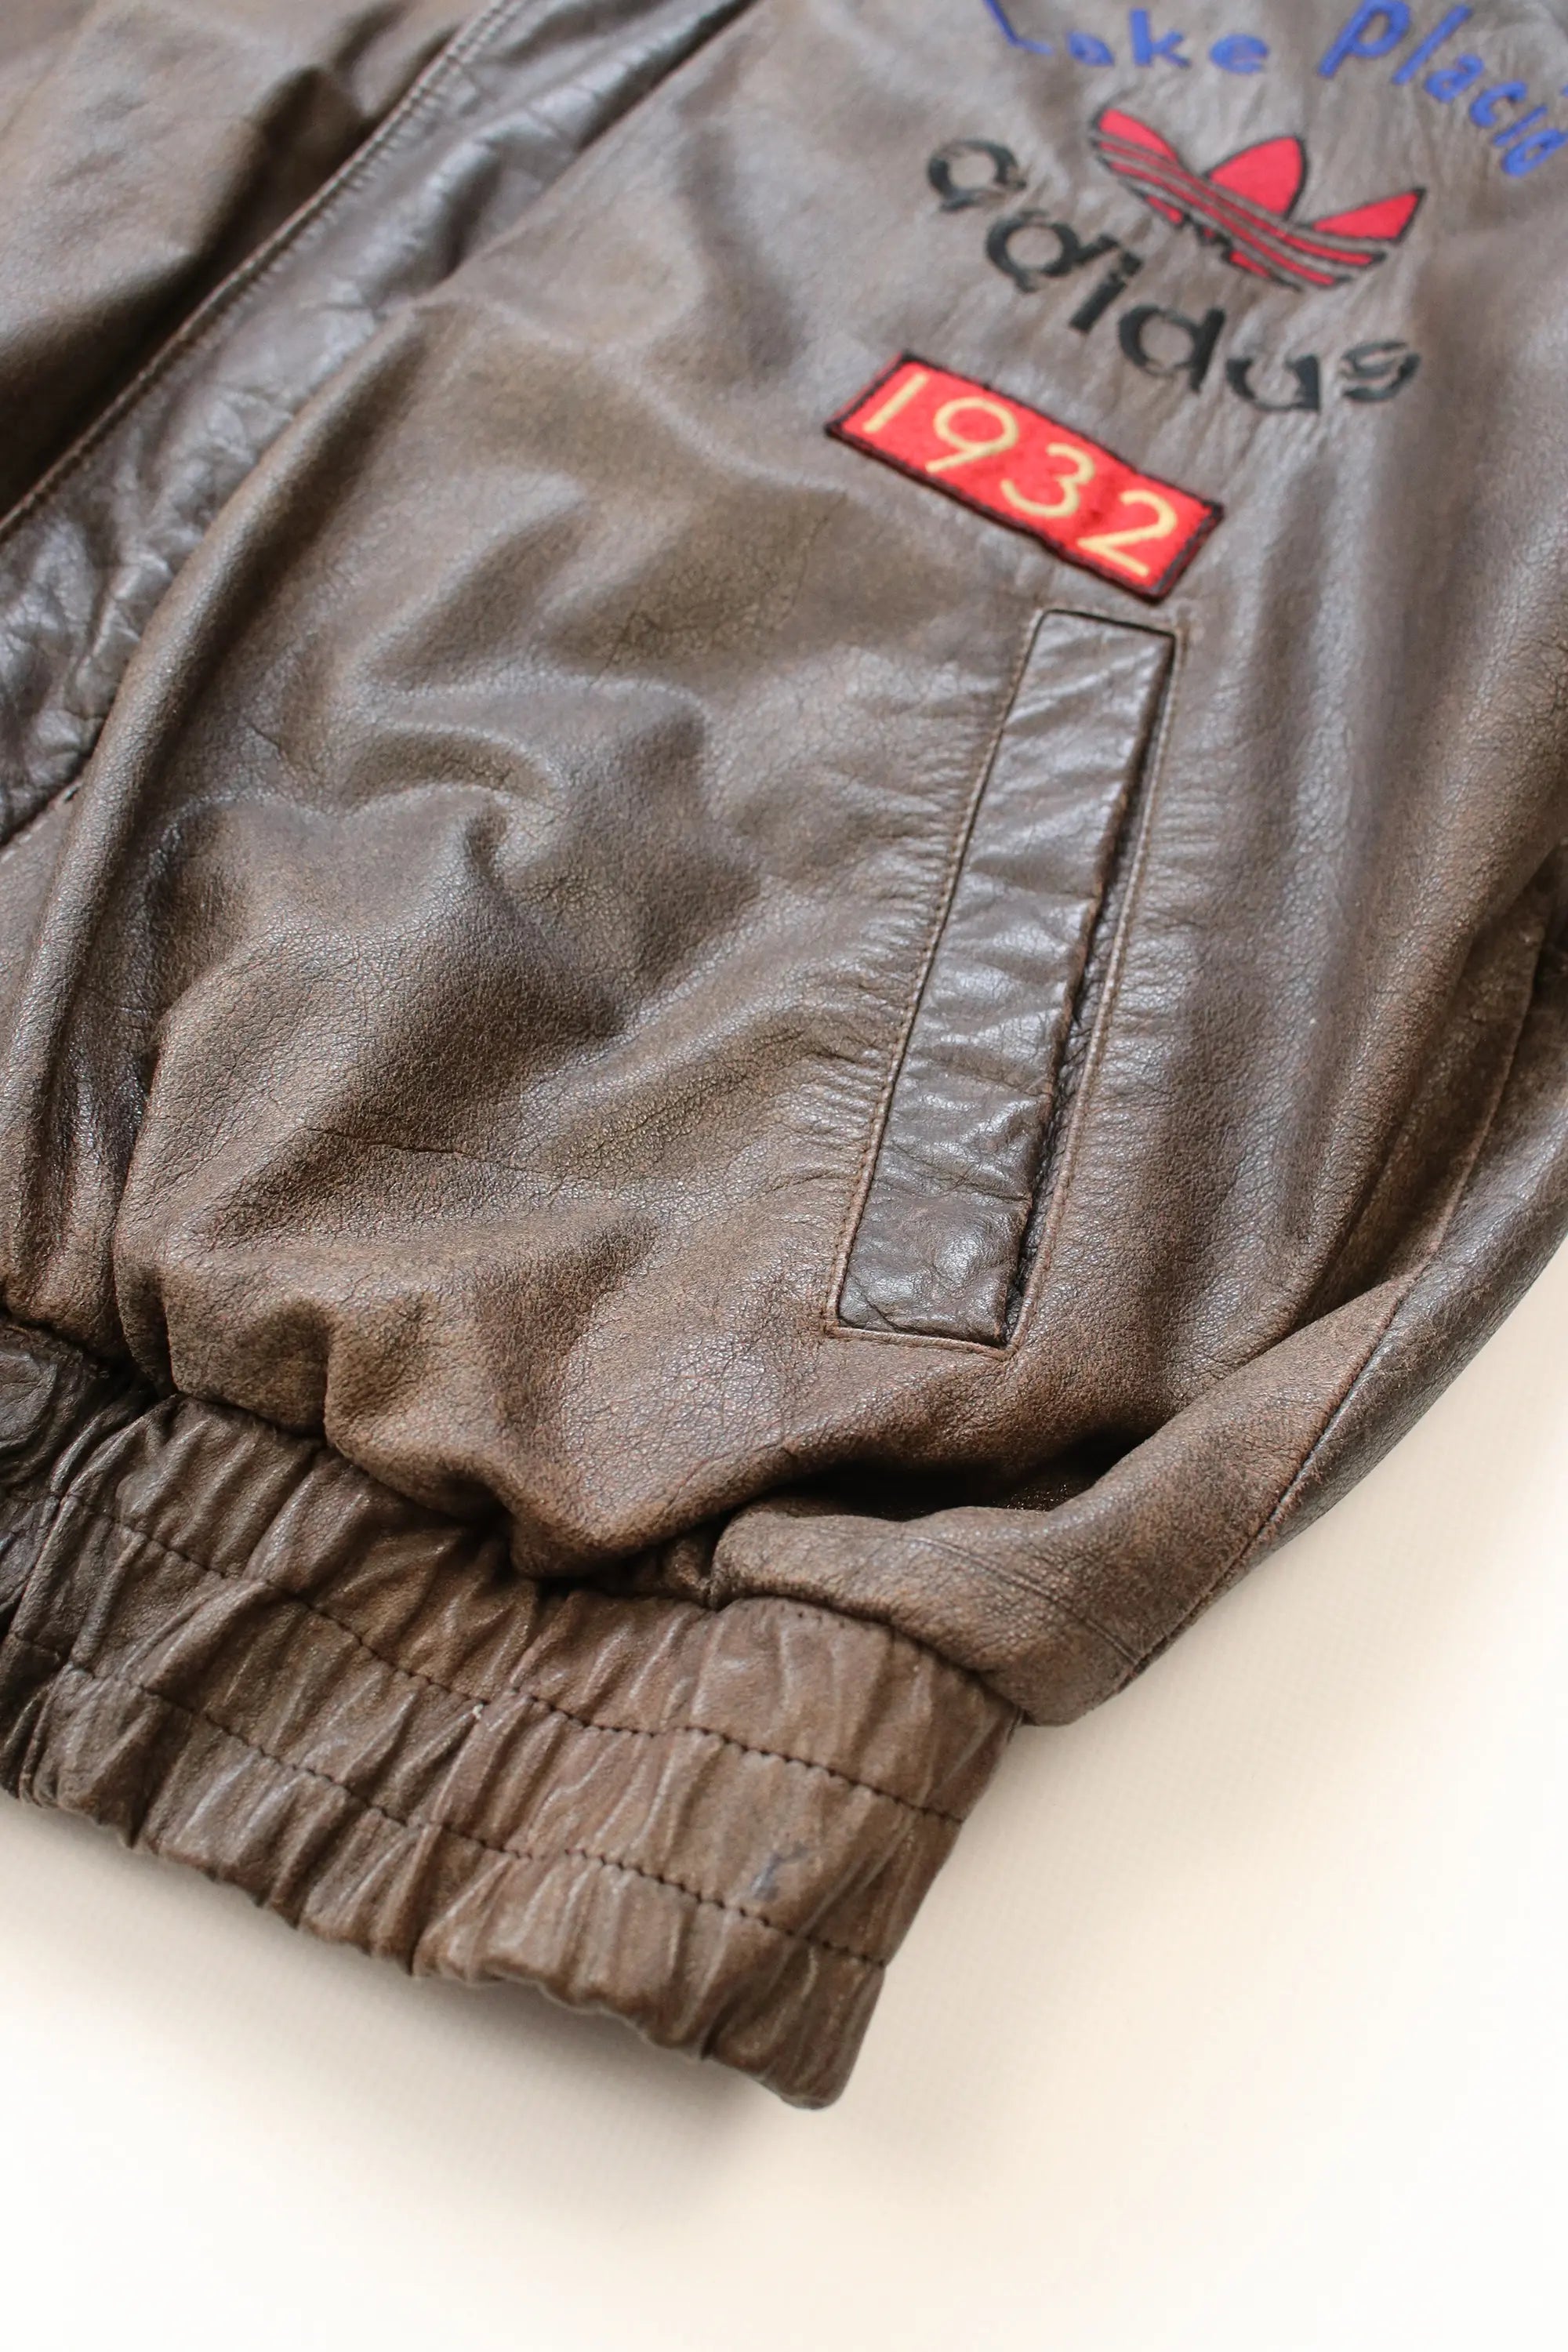 Adidas Lake Placid '32 Leather Jacket